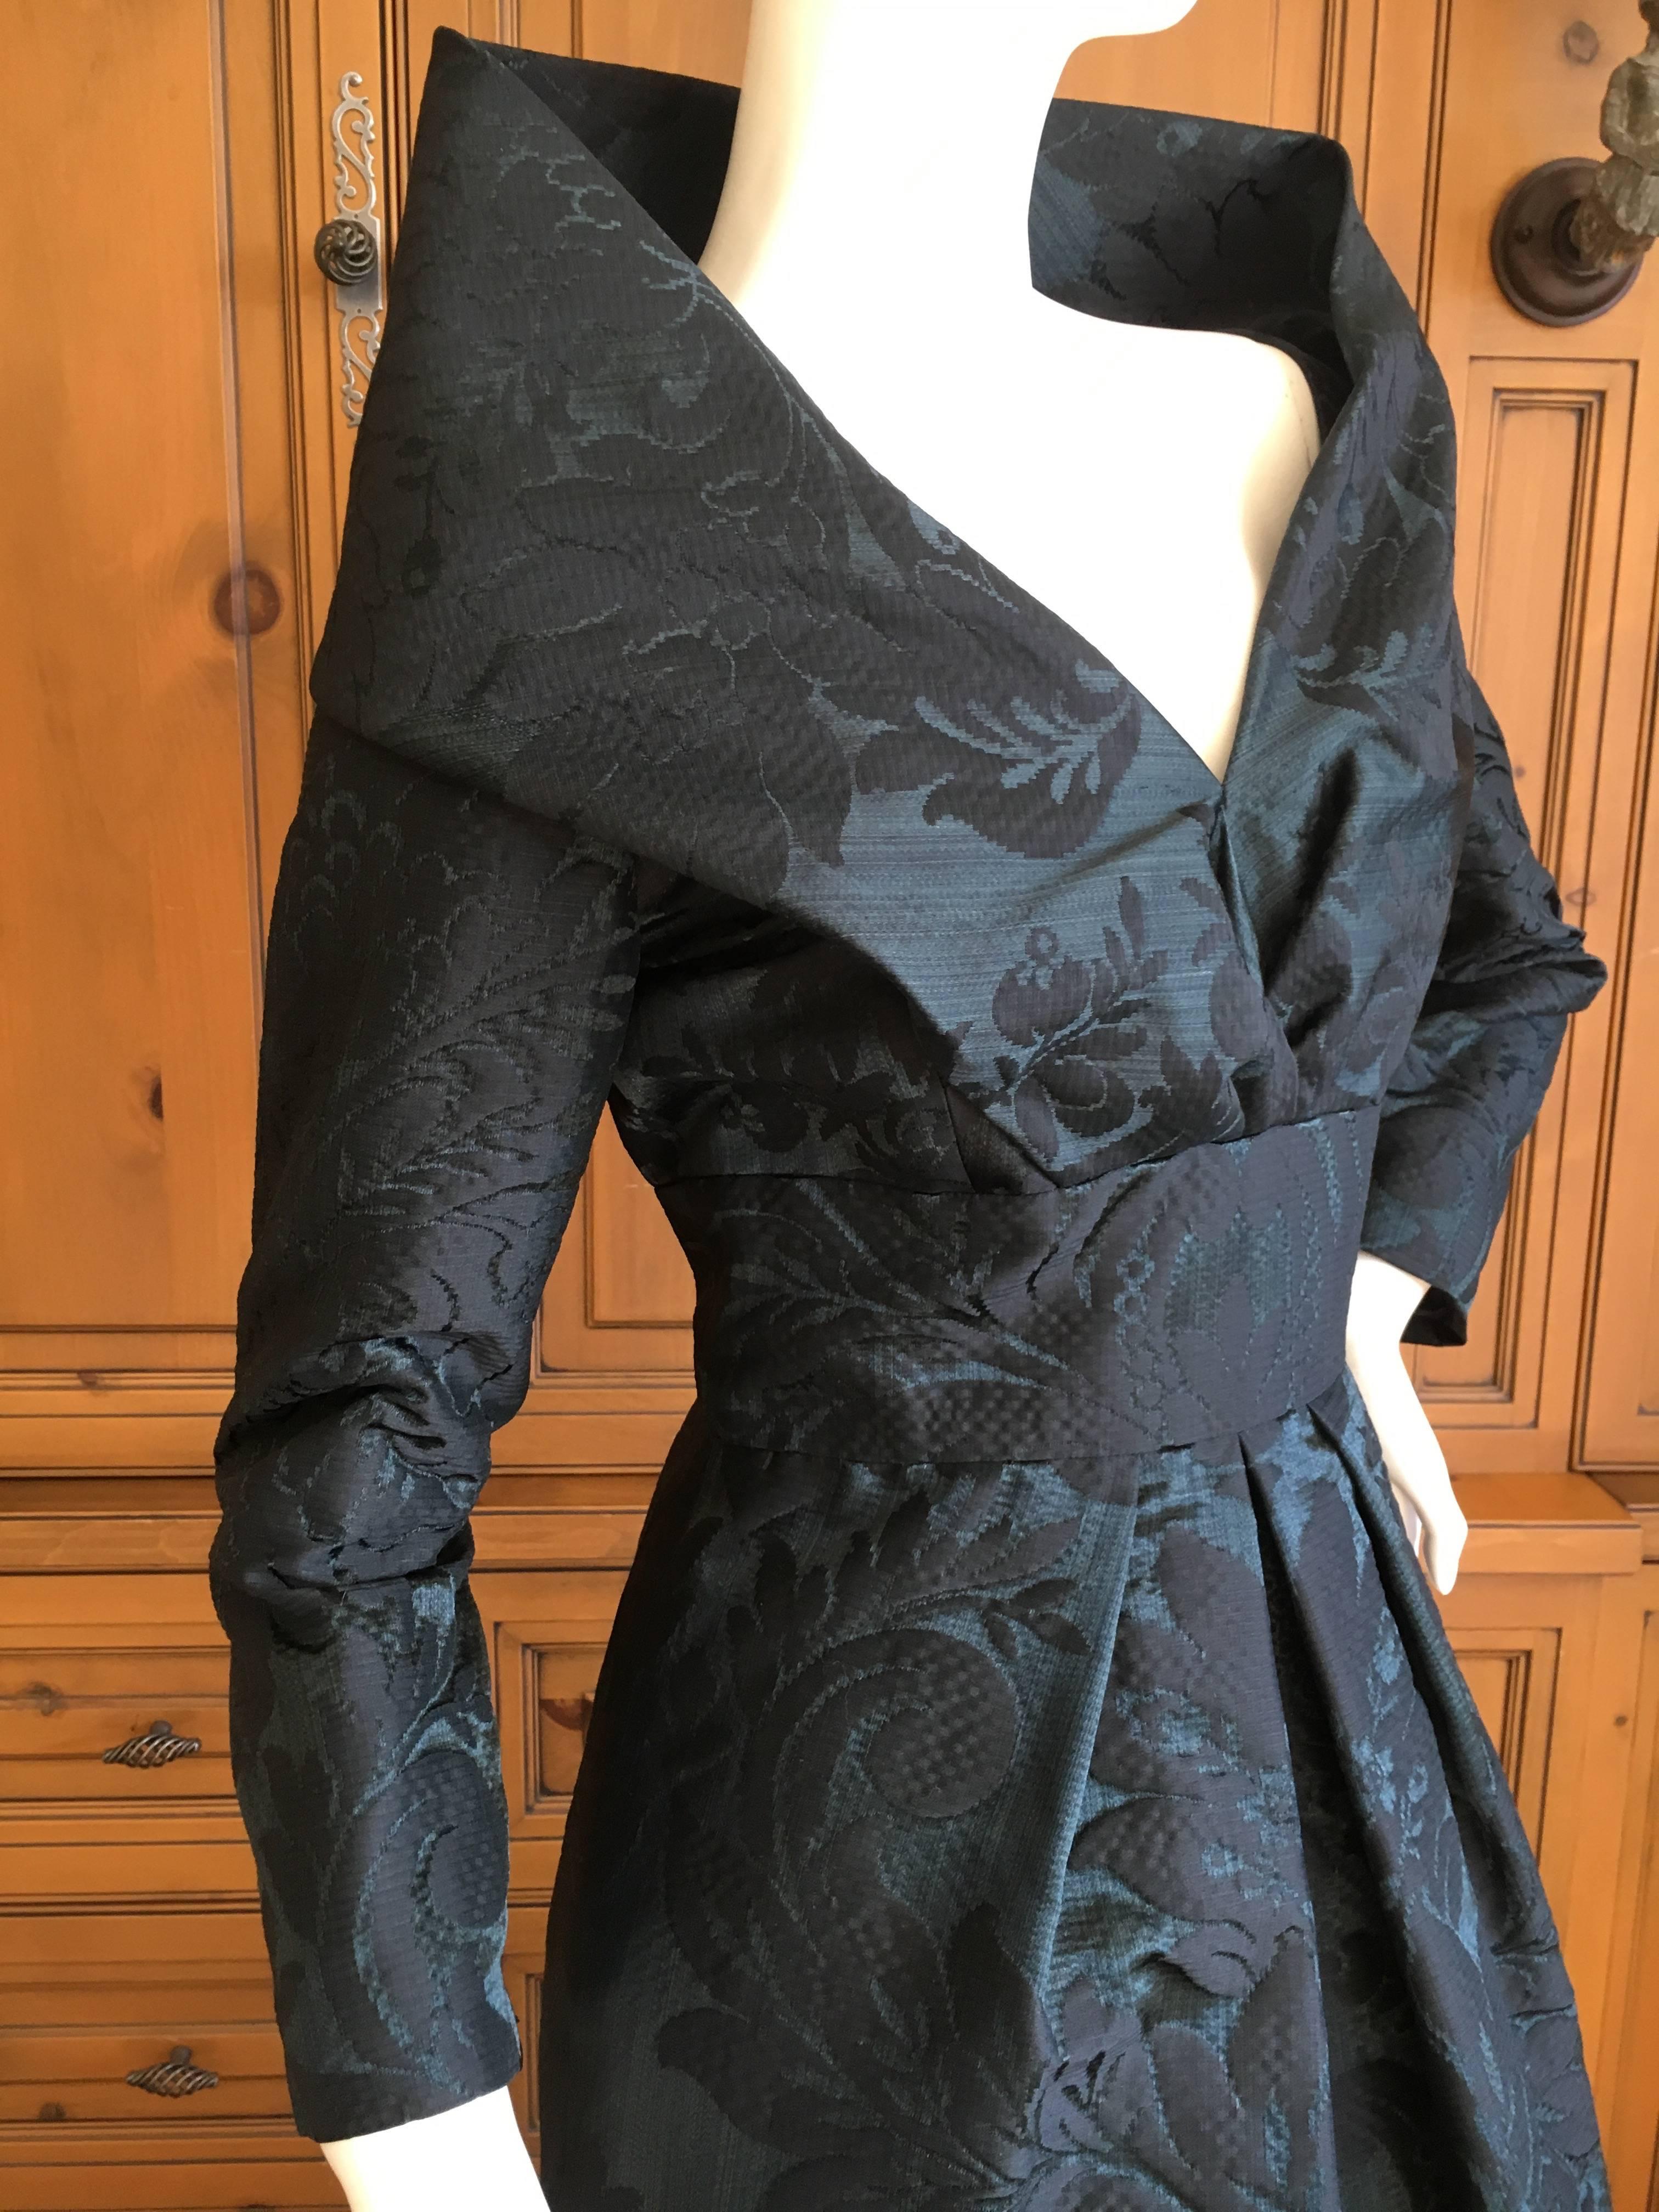 Oscar de la Renta Teal and Black Jacquard Evening Dress with Portrait Collar.
Simply Stunning.
Size 6
Bust 36